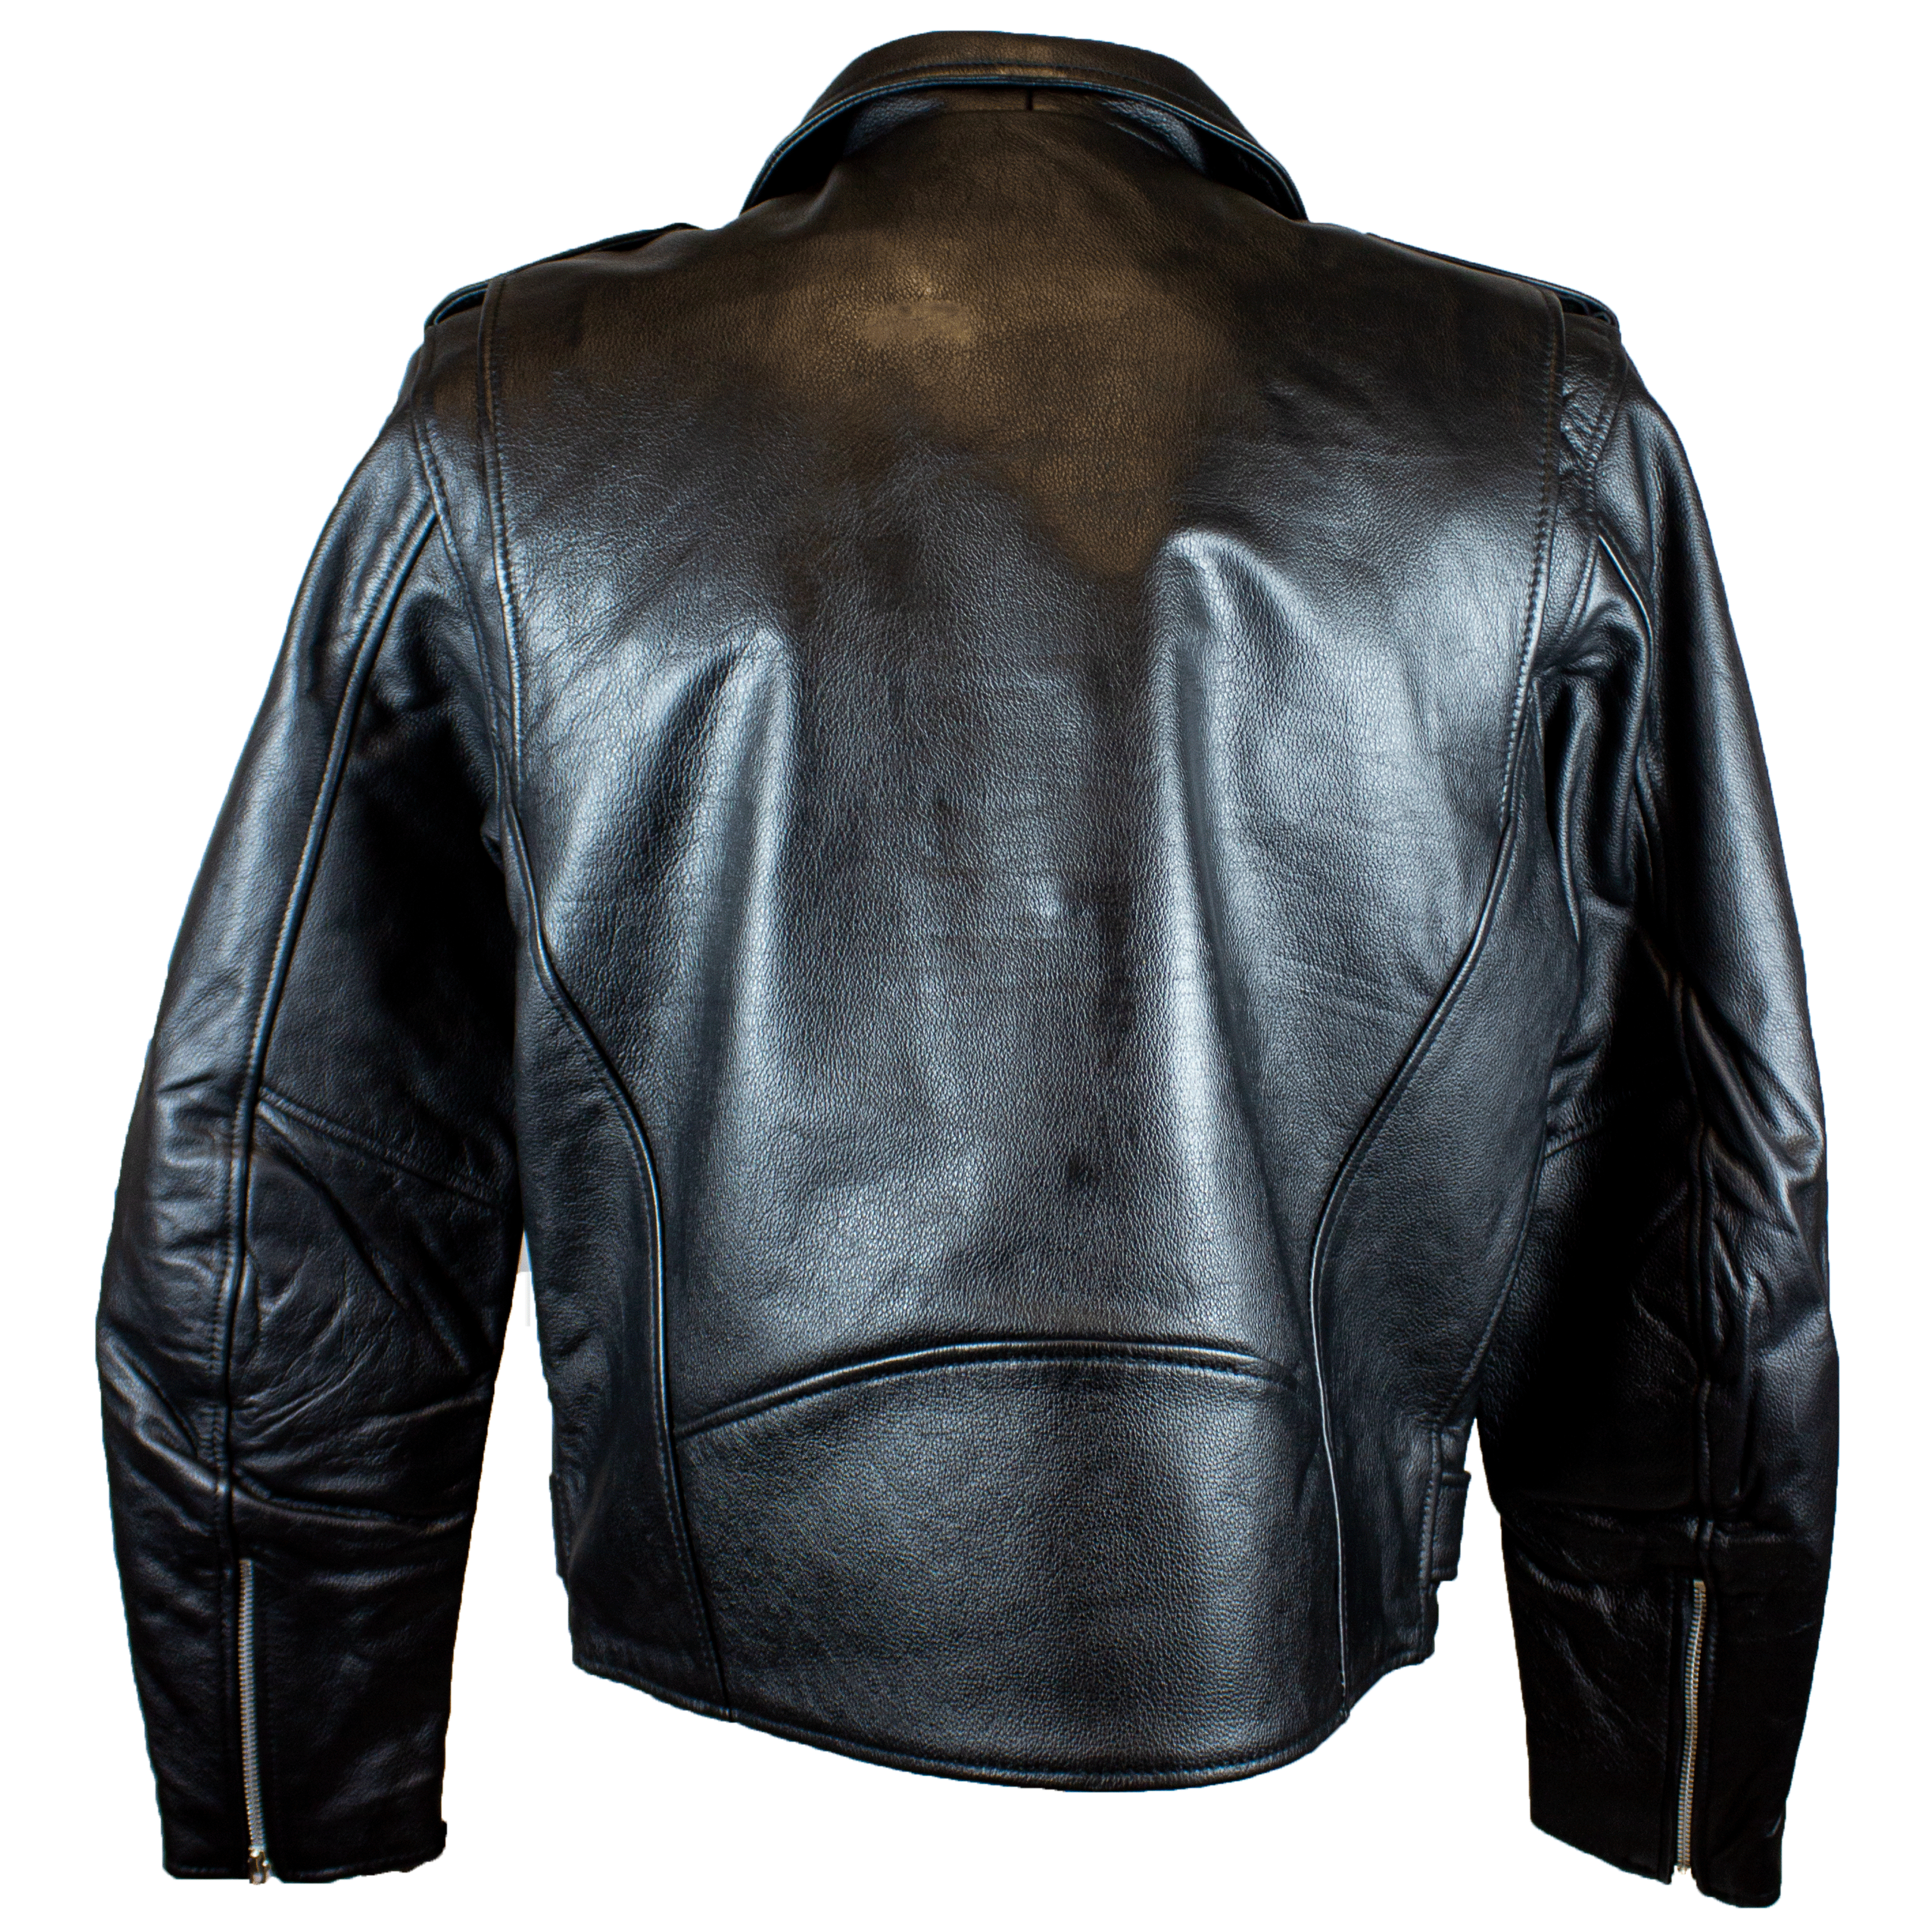 BOL/Open Road Men's Motorcycle Leather Jacket